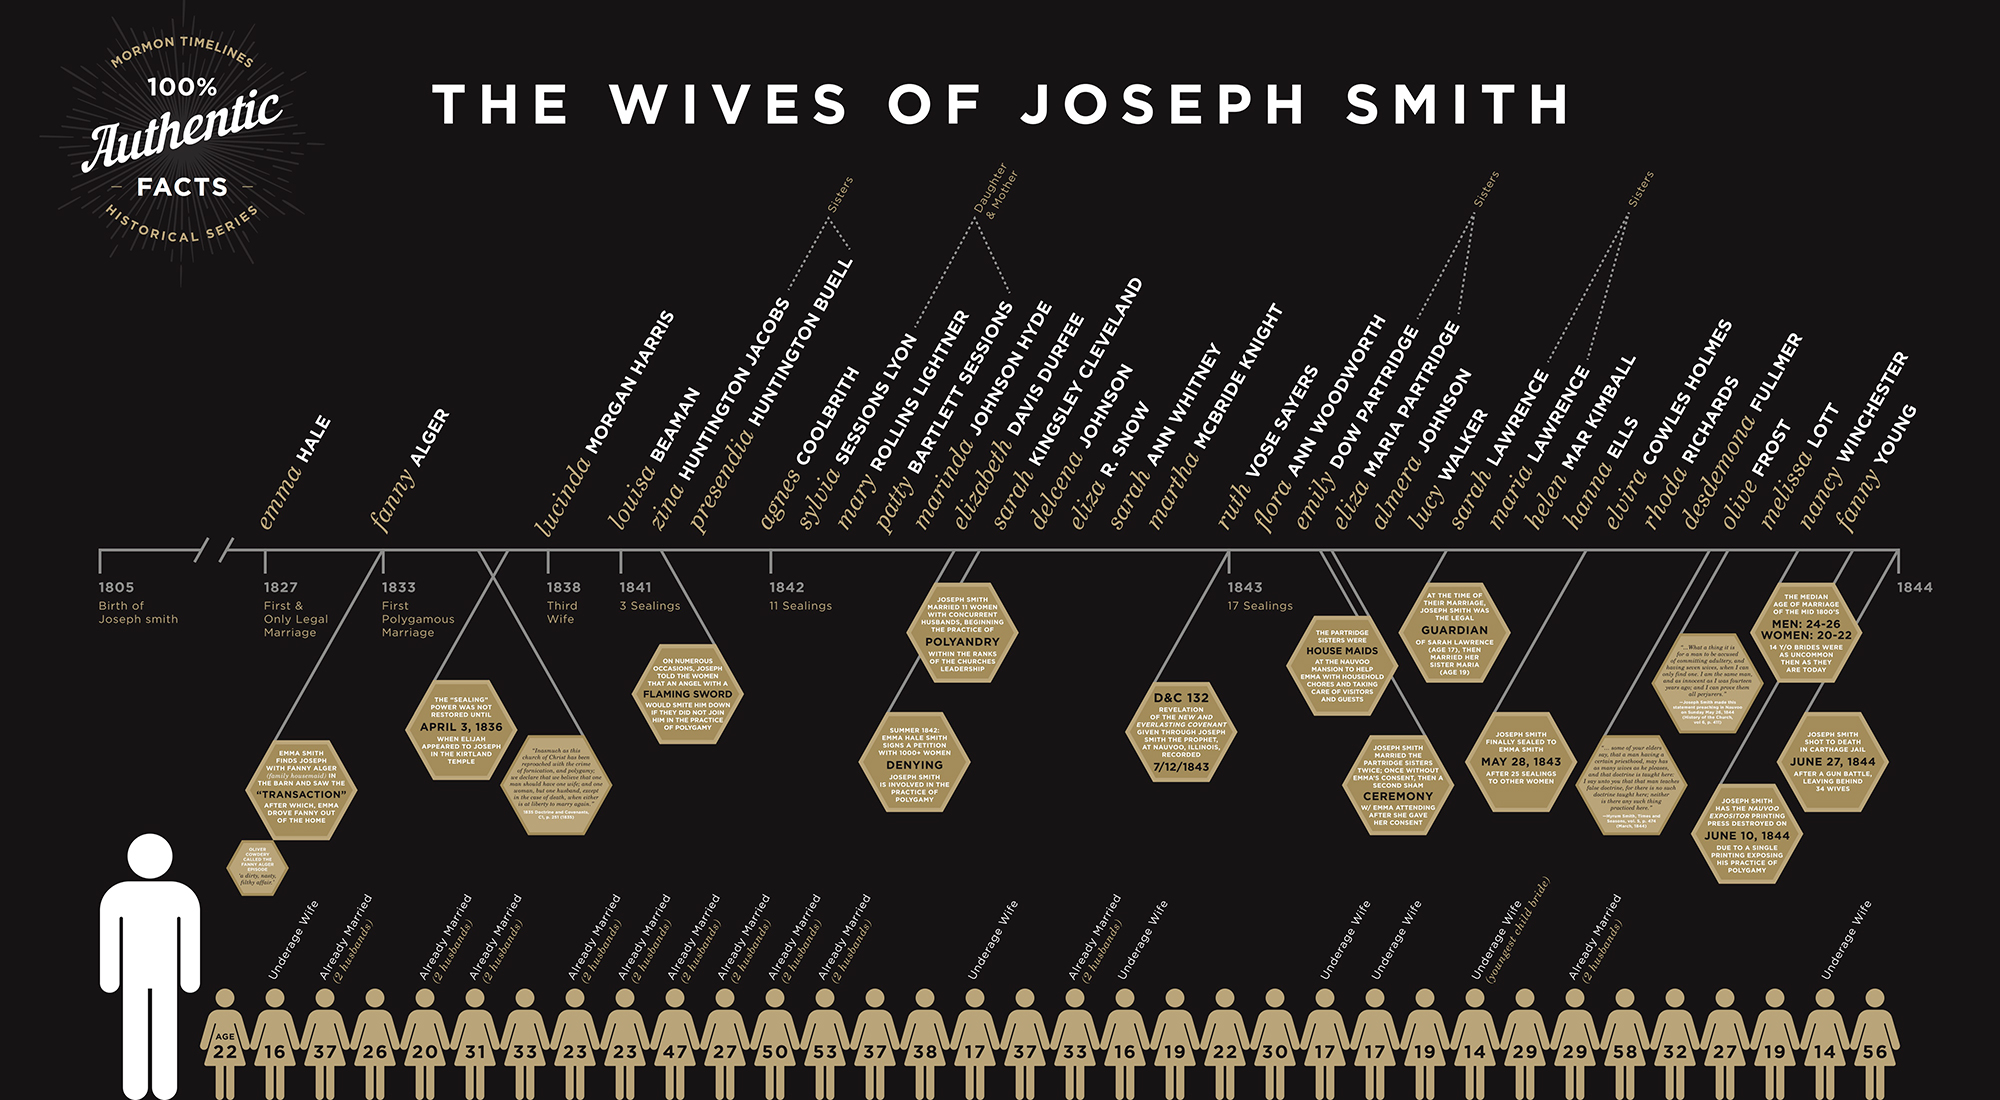 Wives of Joseph Smith